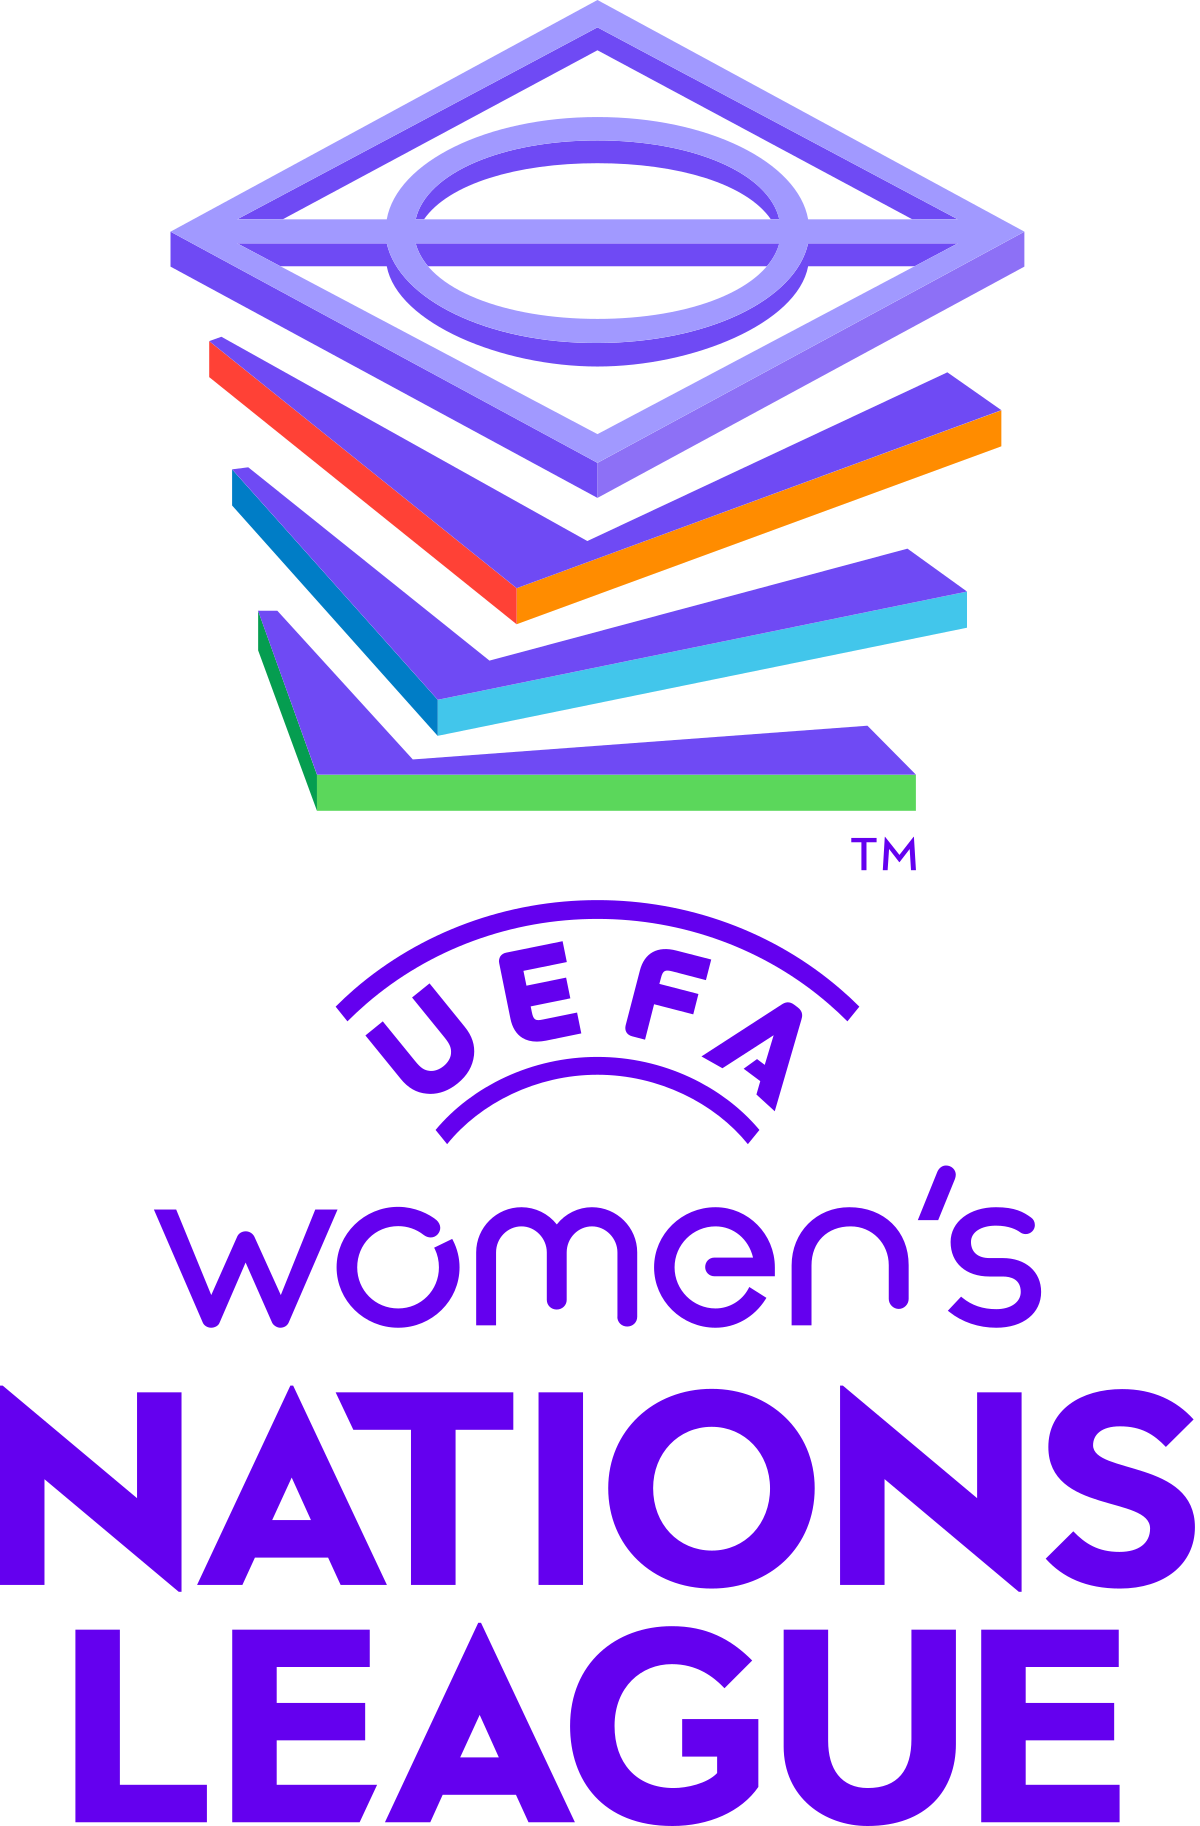 UEFA Nations League C